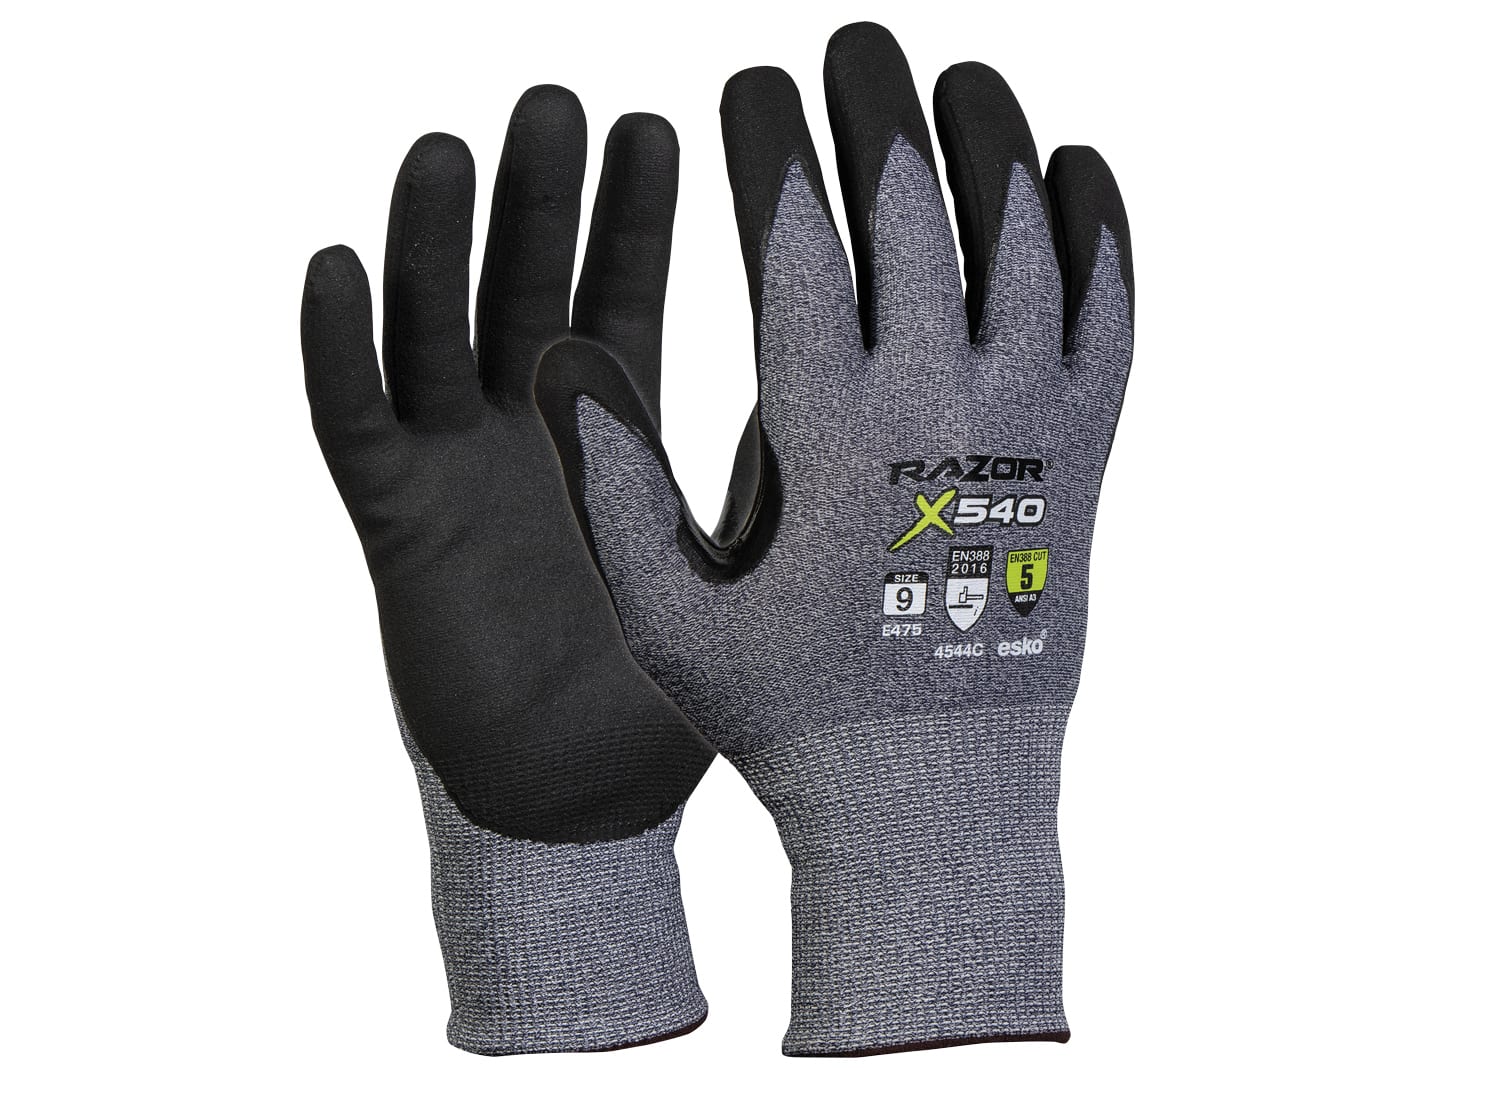 Esko Razor X540 Gloves Size 10